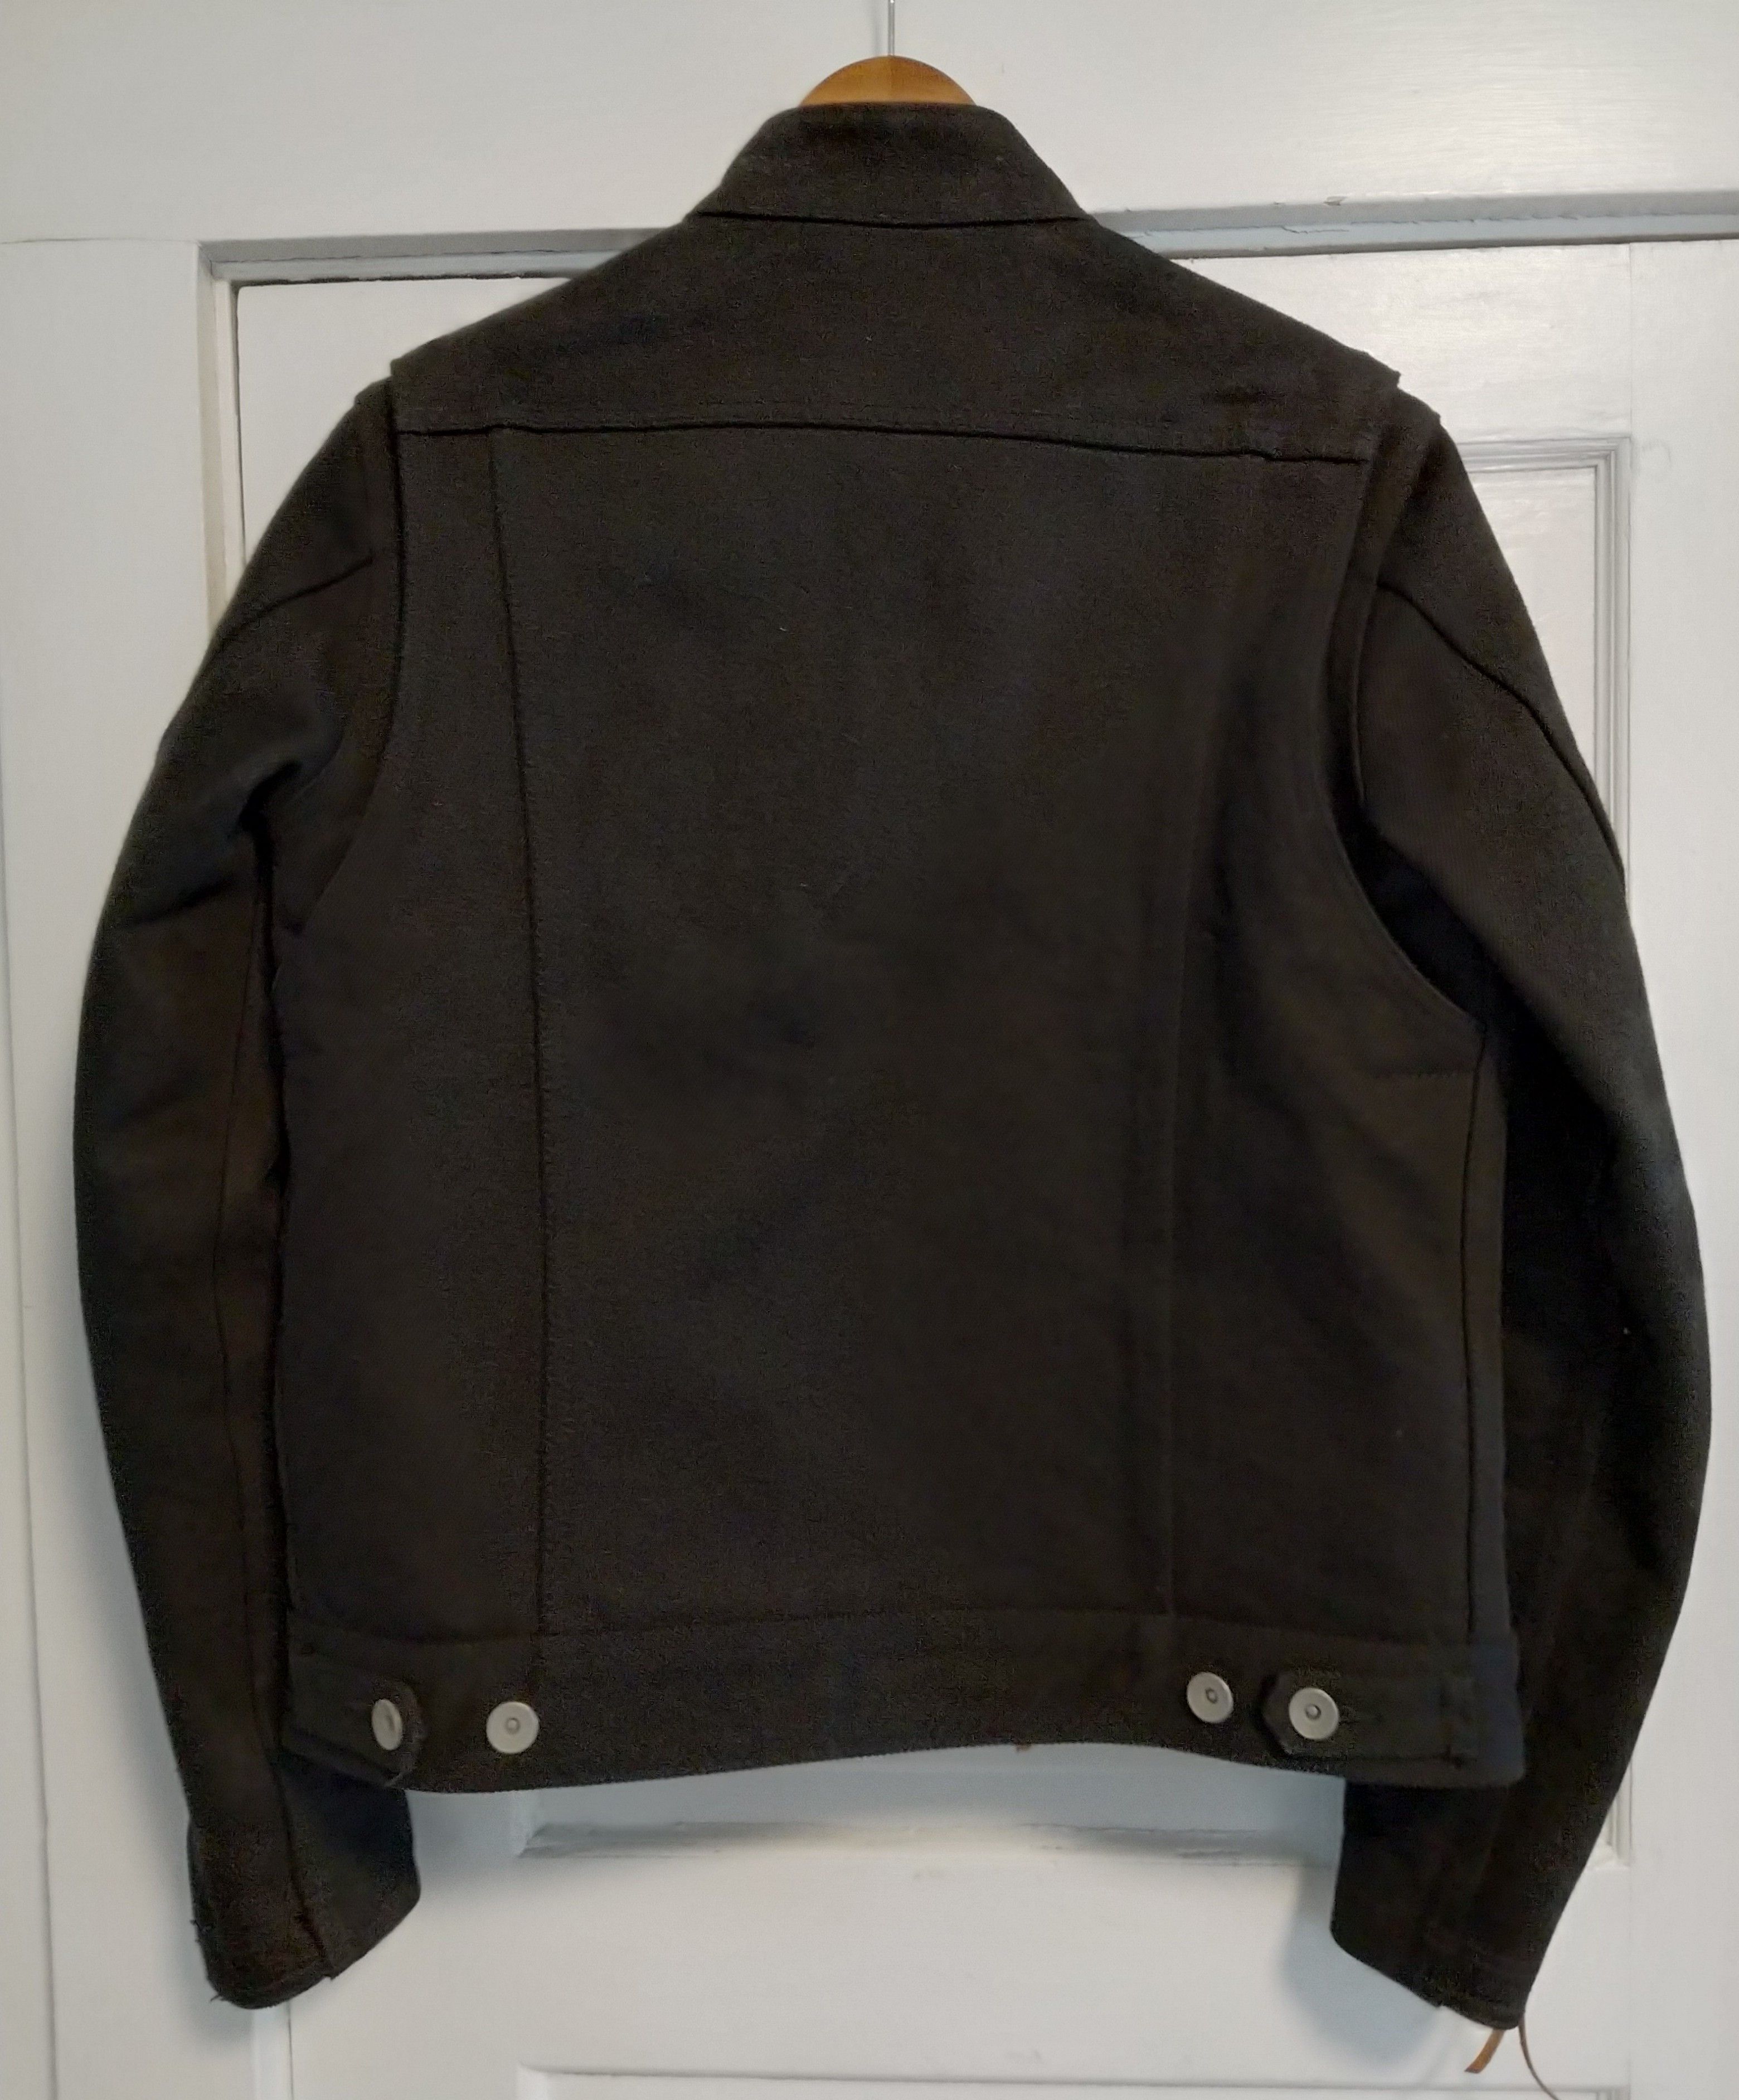 Iron Heart Iron Heart 21oz Denim Rider's Jacket Superblack Size US S / EU 44-46 / 1 - 4 Thumbnail